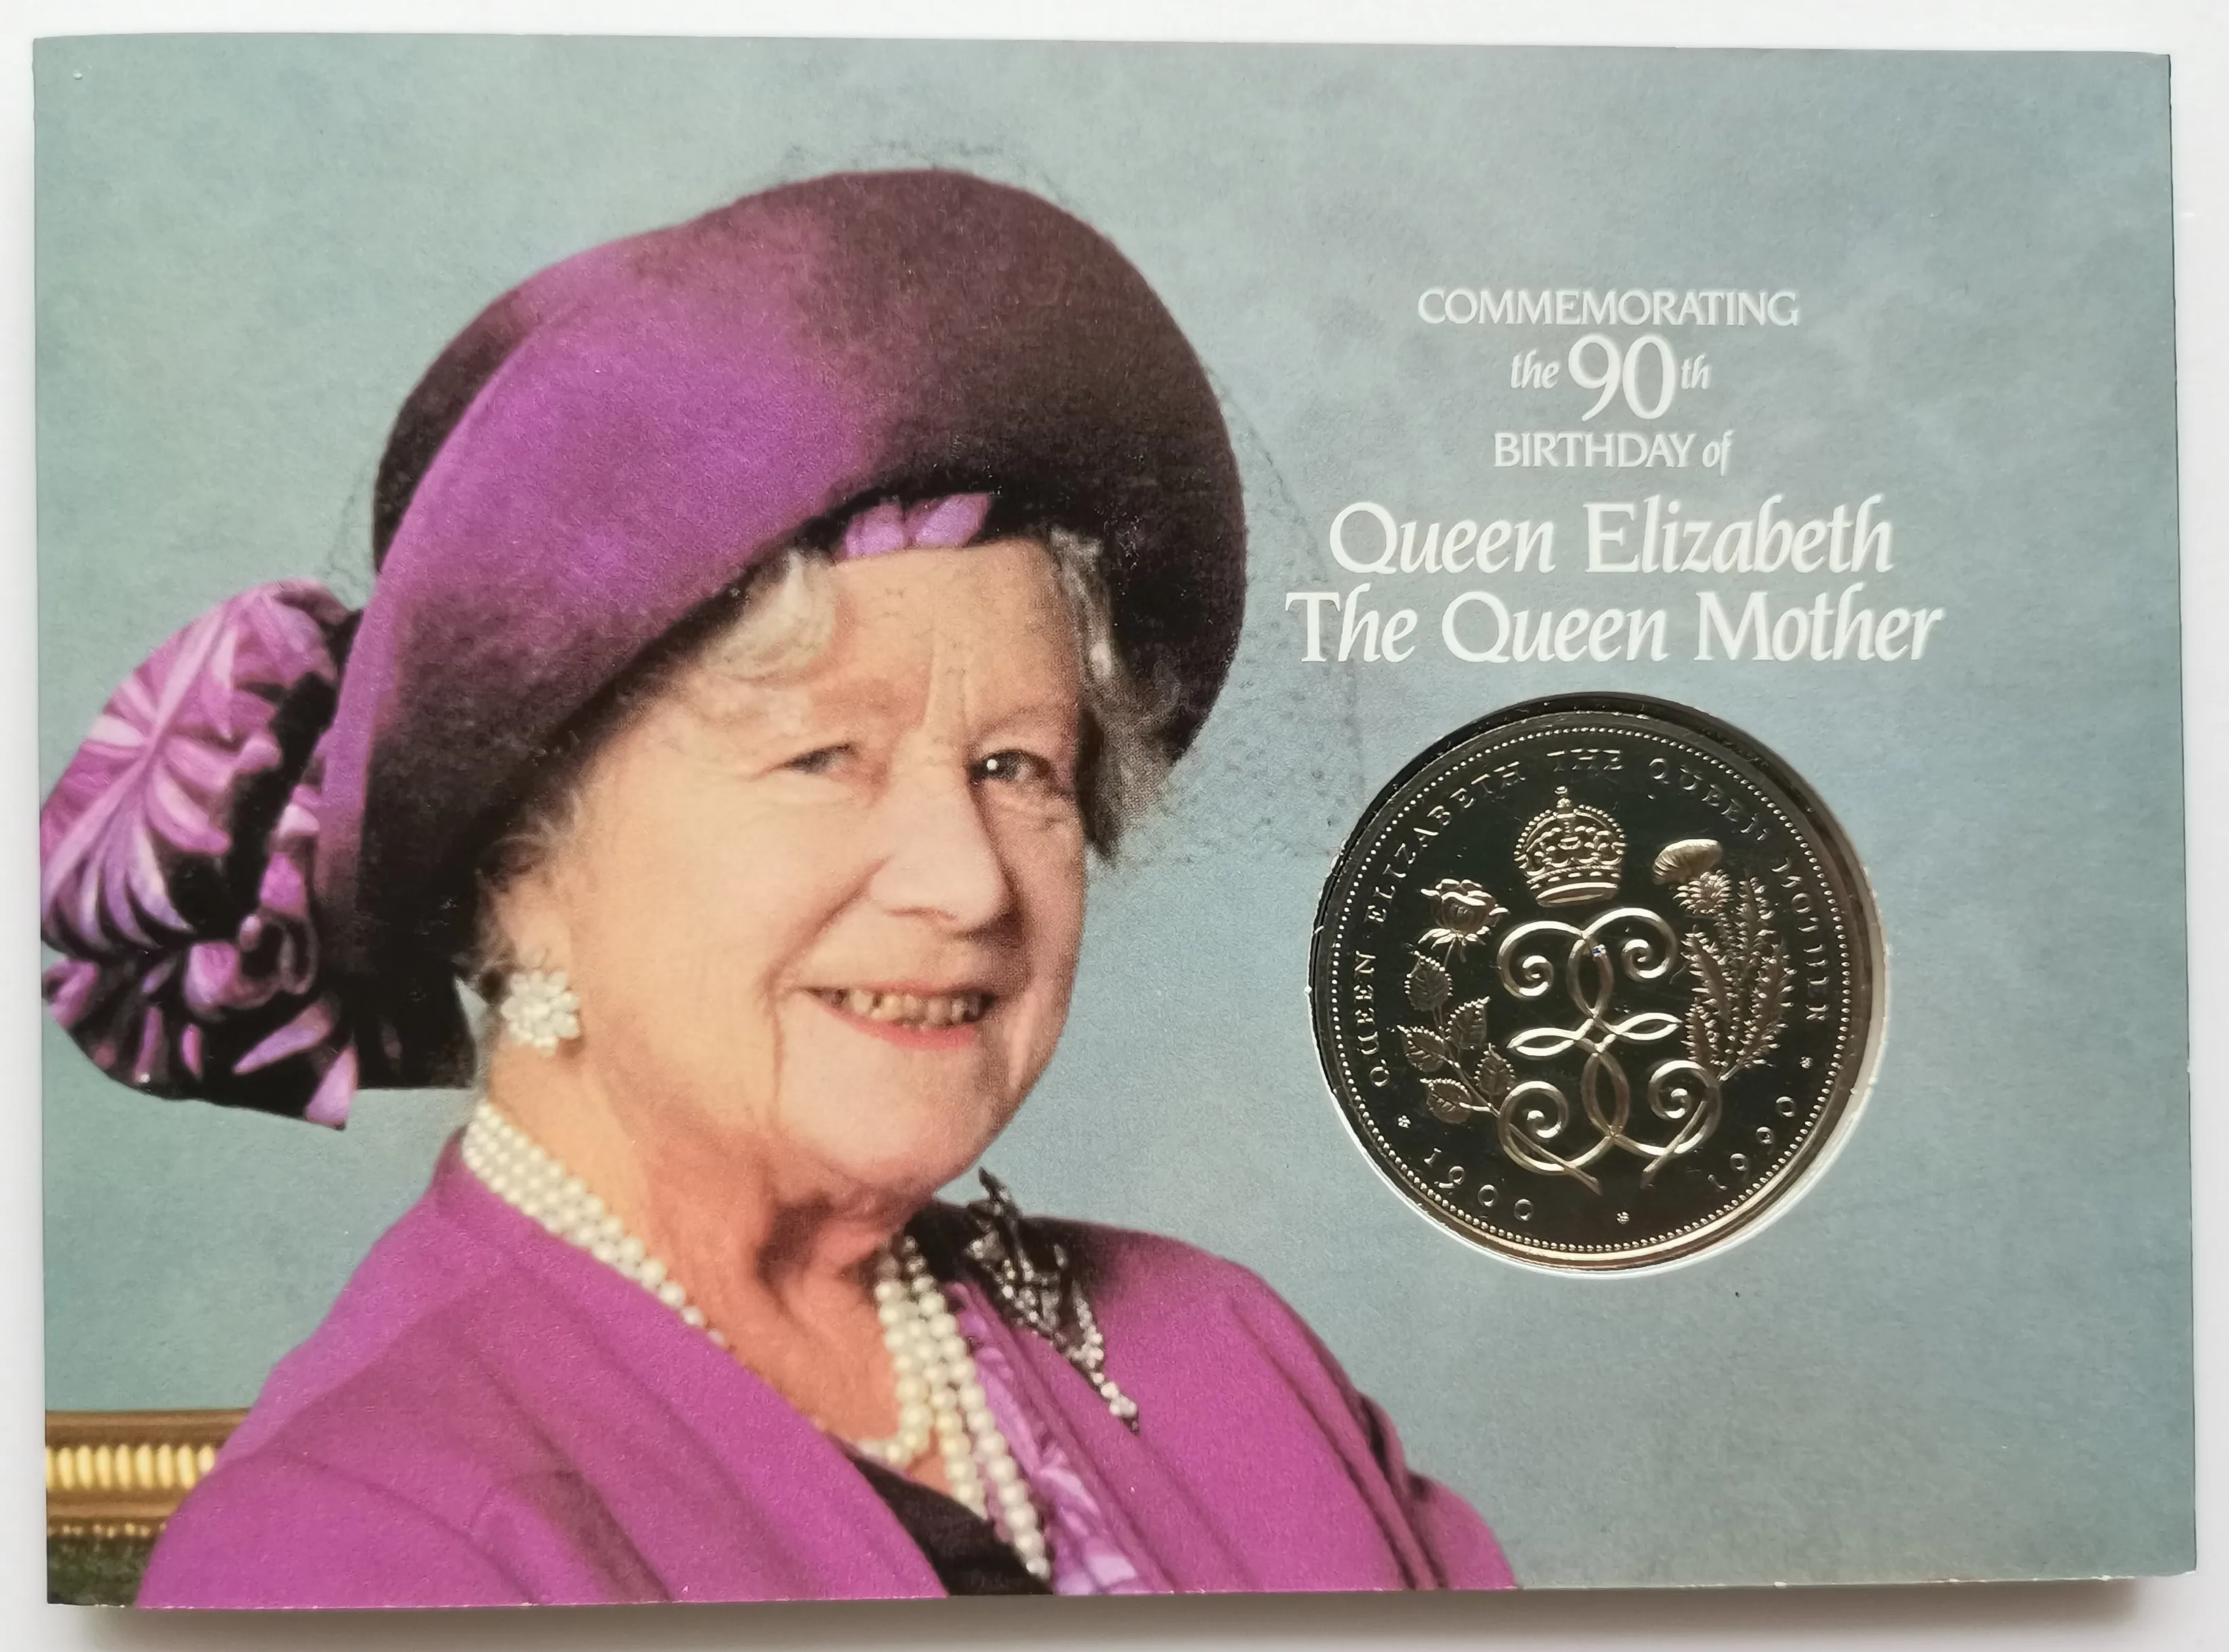 

Original Card Binder UK 1990 5 Pounds Queen Mother's 90 Th Birthday Commemorative Coin Kroner Copper Nickel